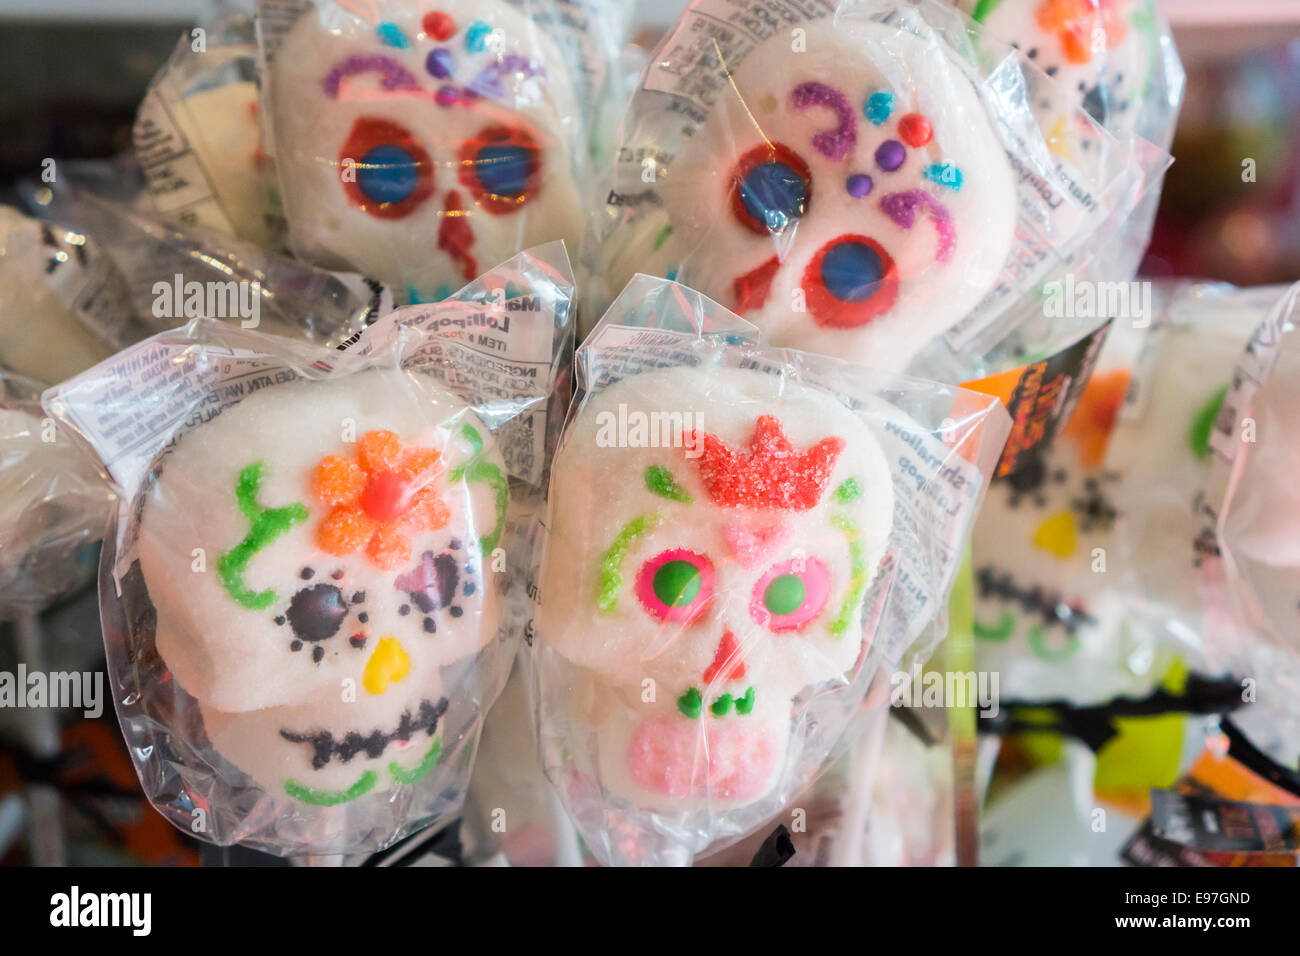 Sugar skull candies for Halloween Stock Photo